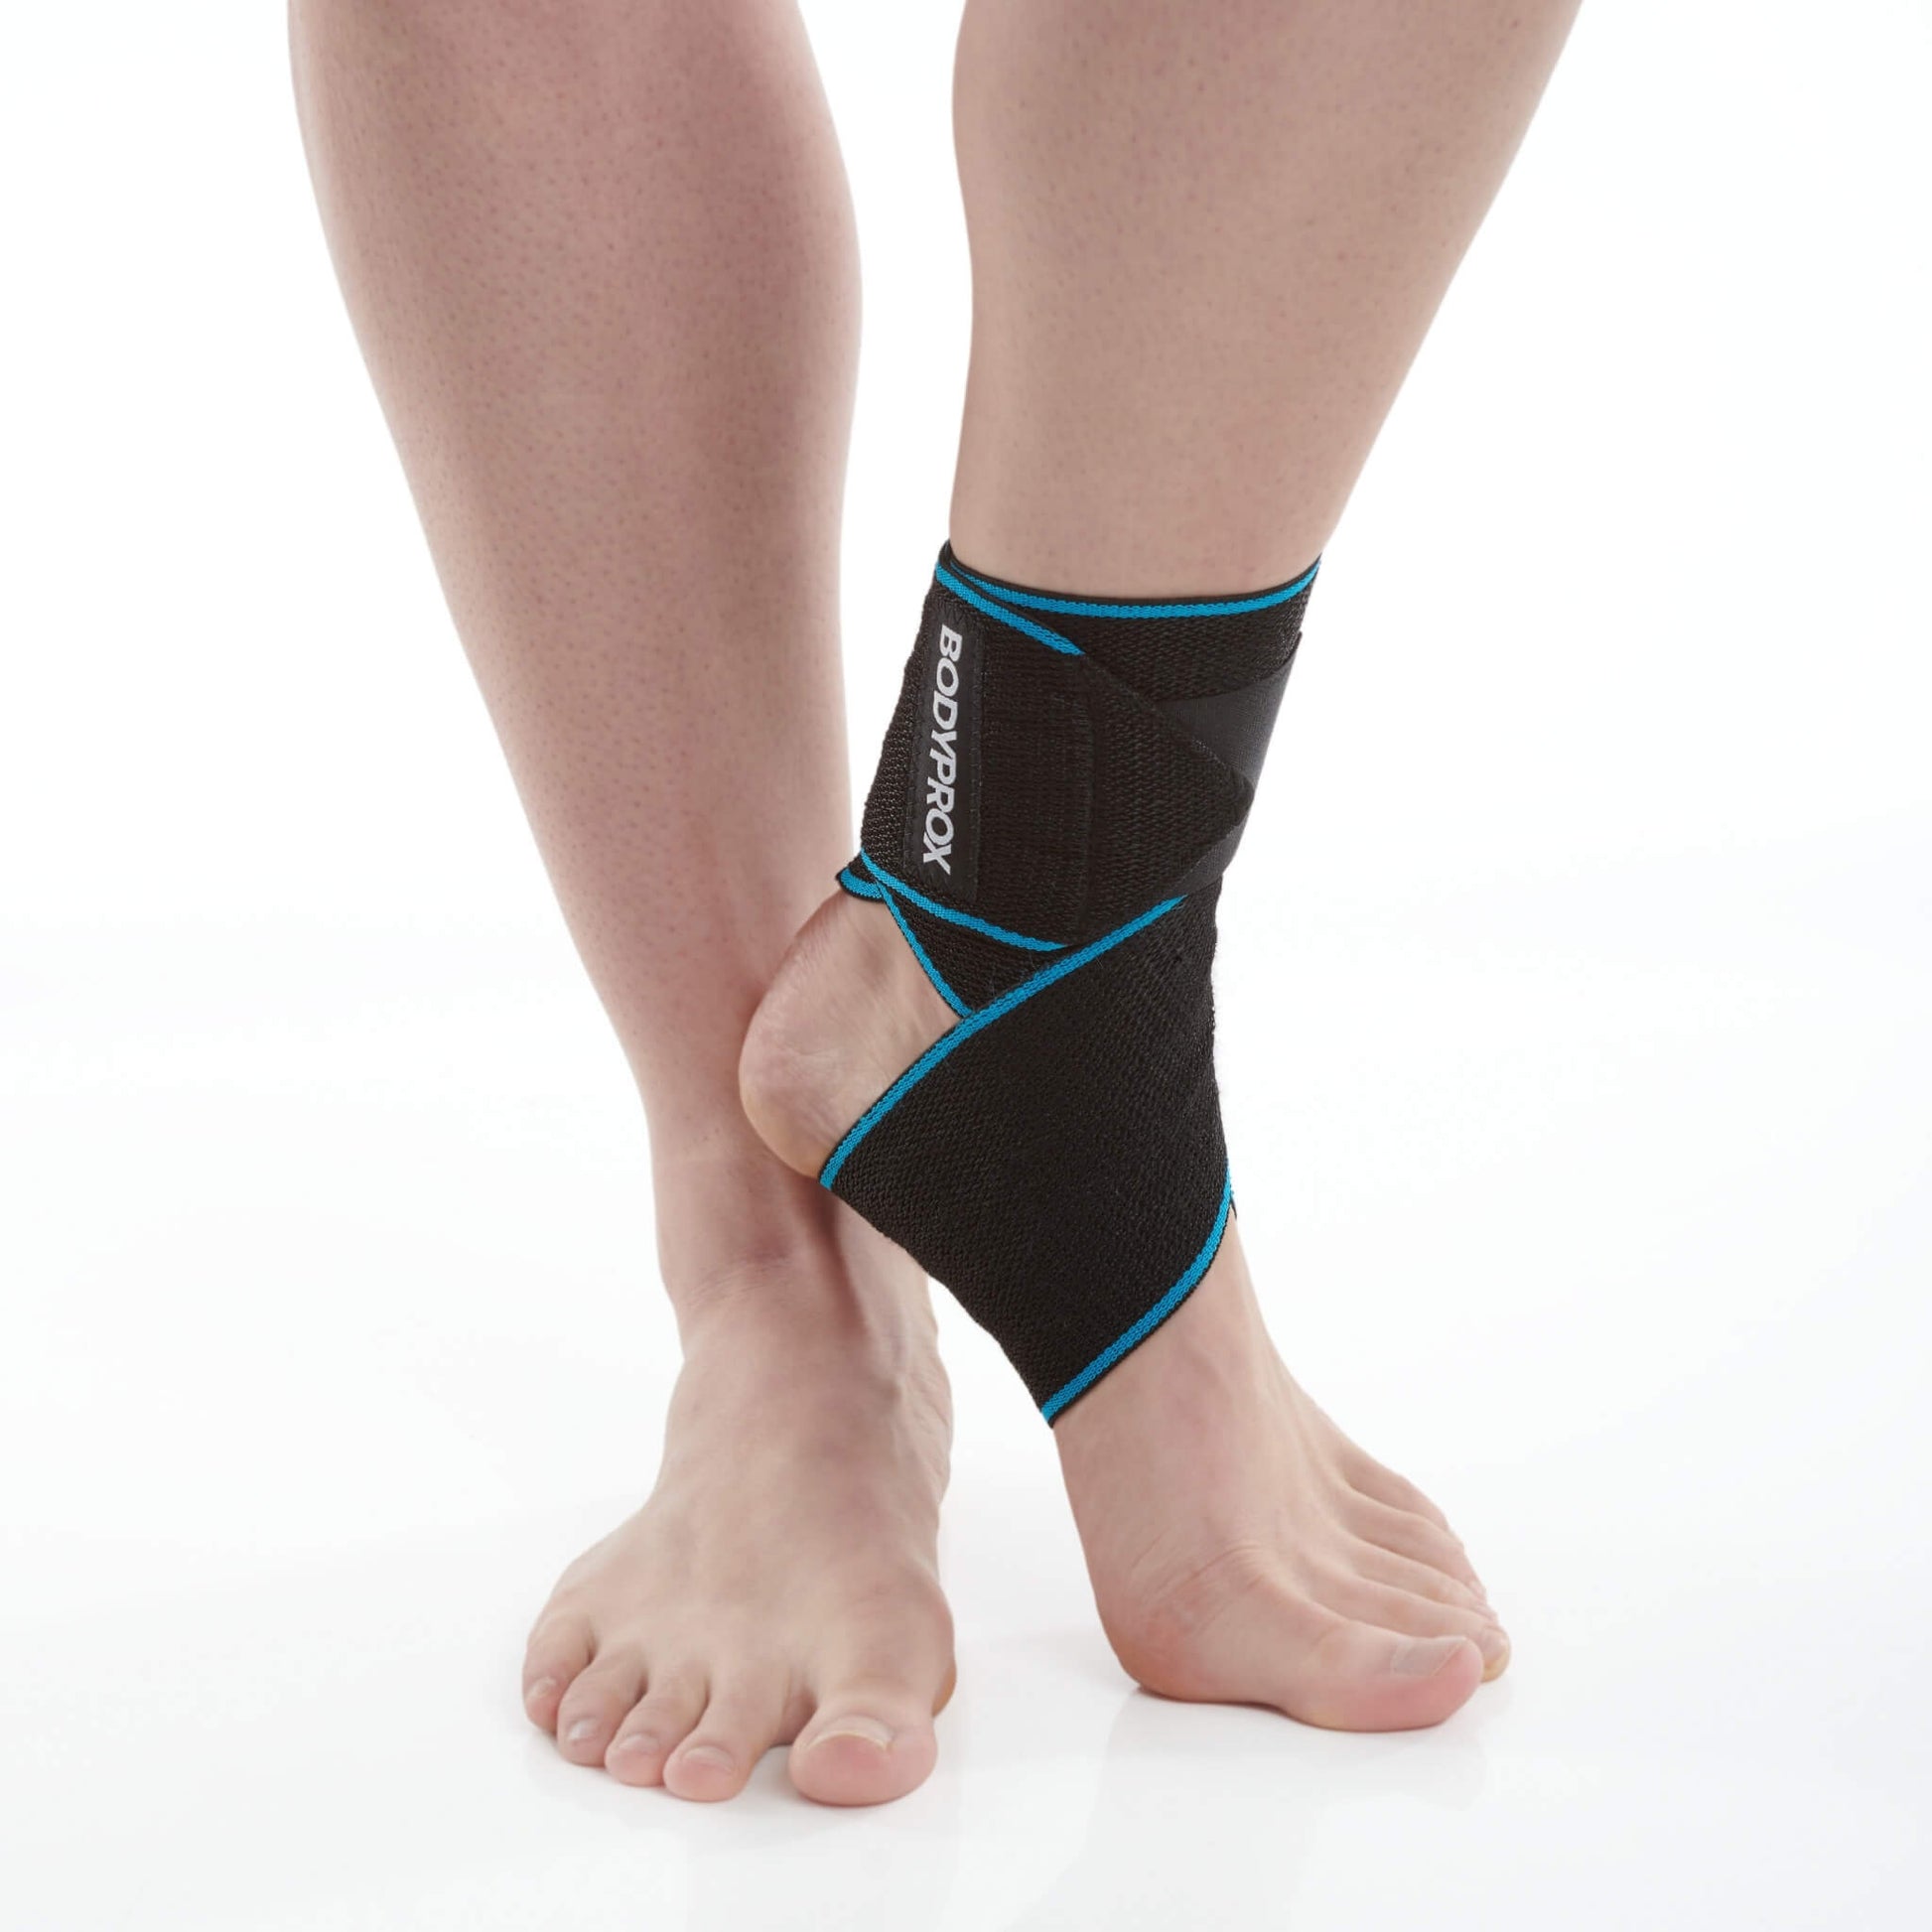 Ankle Support Brace 2 Pack, Adjustable Compression Ankle Braces